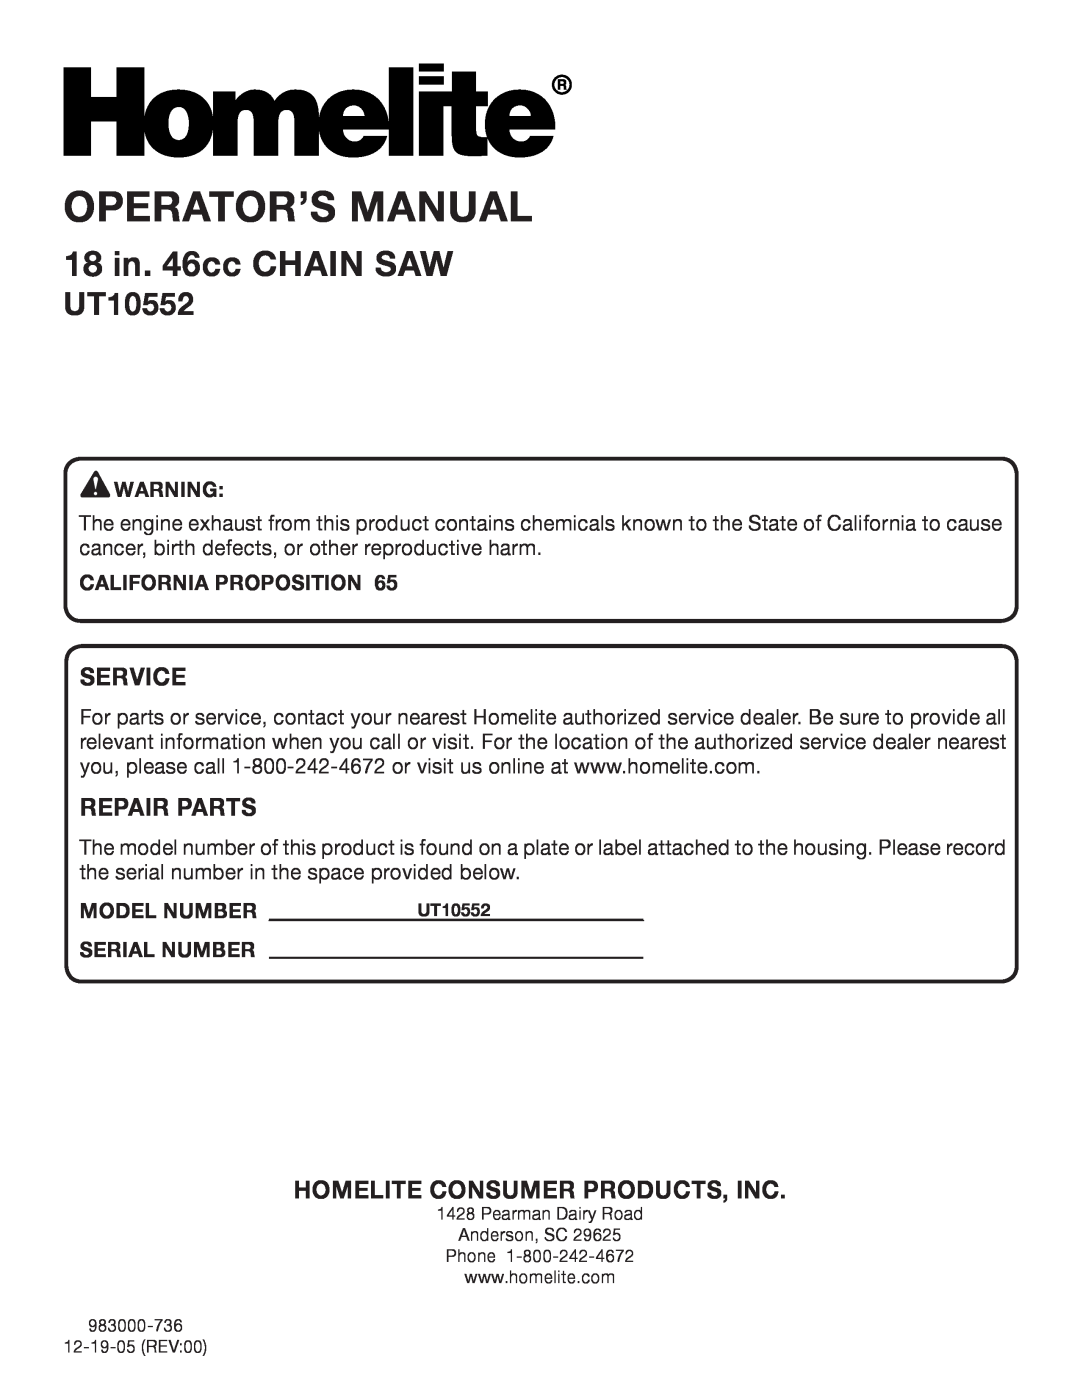 Homelite UT10552 manual Service, Repair Parts, Homelite Consumer Products, Inc, Operator’S Manual, 18 in. 46cc CHAIN SAW 